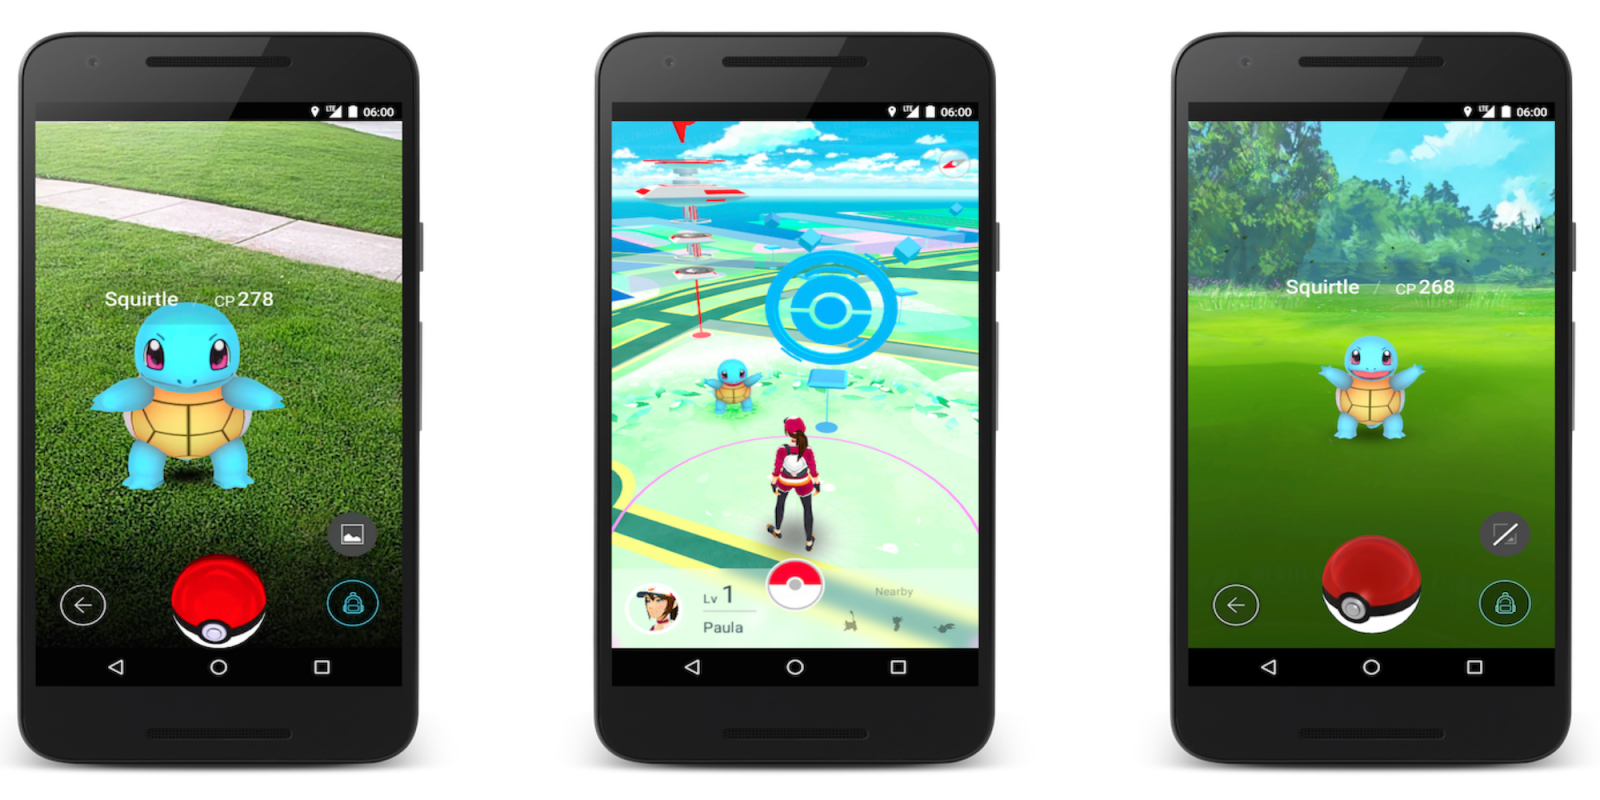 Download Pokemon go for HTC - Download pokemon go for HTC - Quora